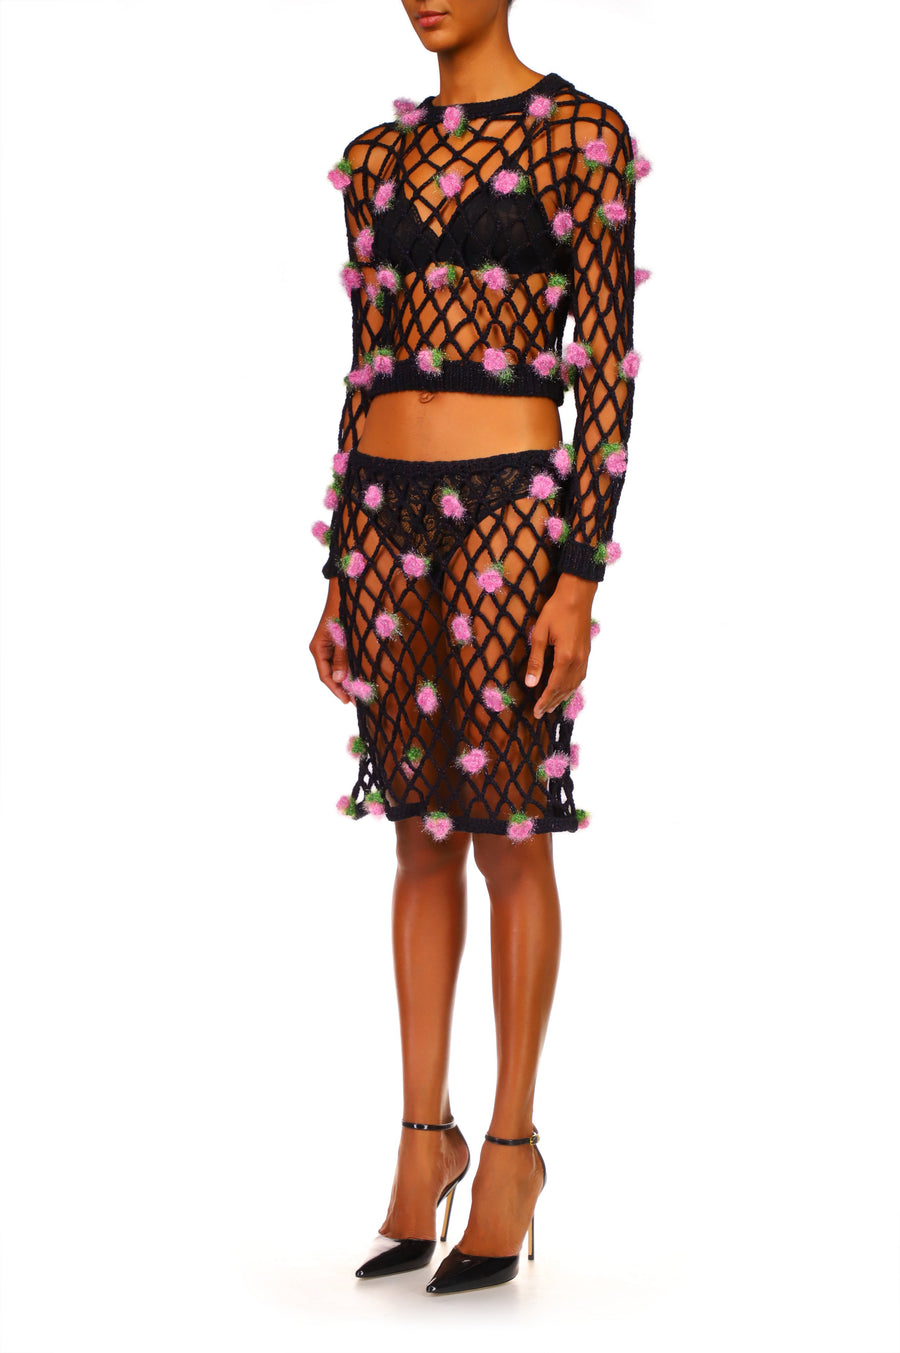 Black Hand Crochet Mini Skirt With Pink Flowers